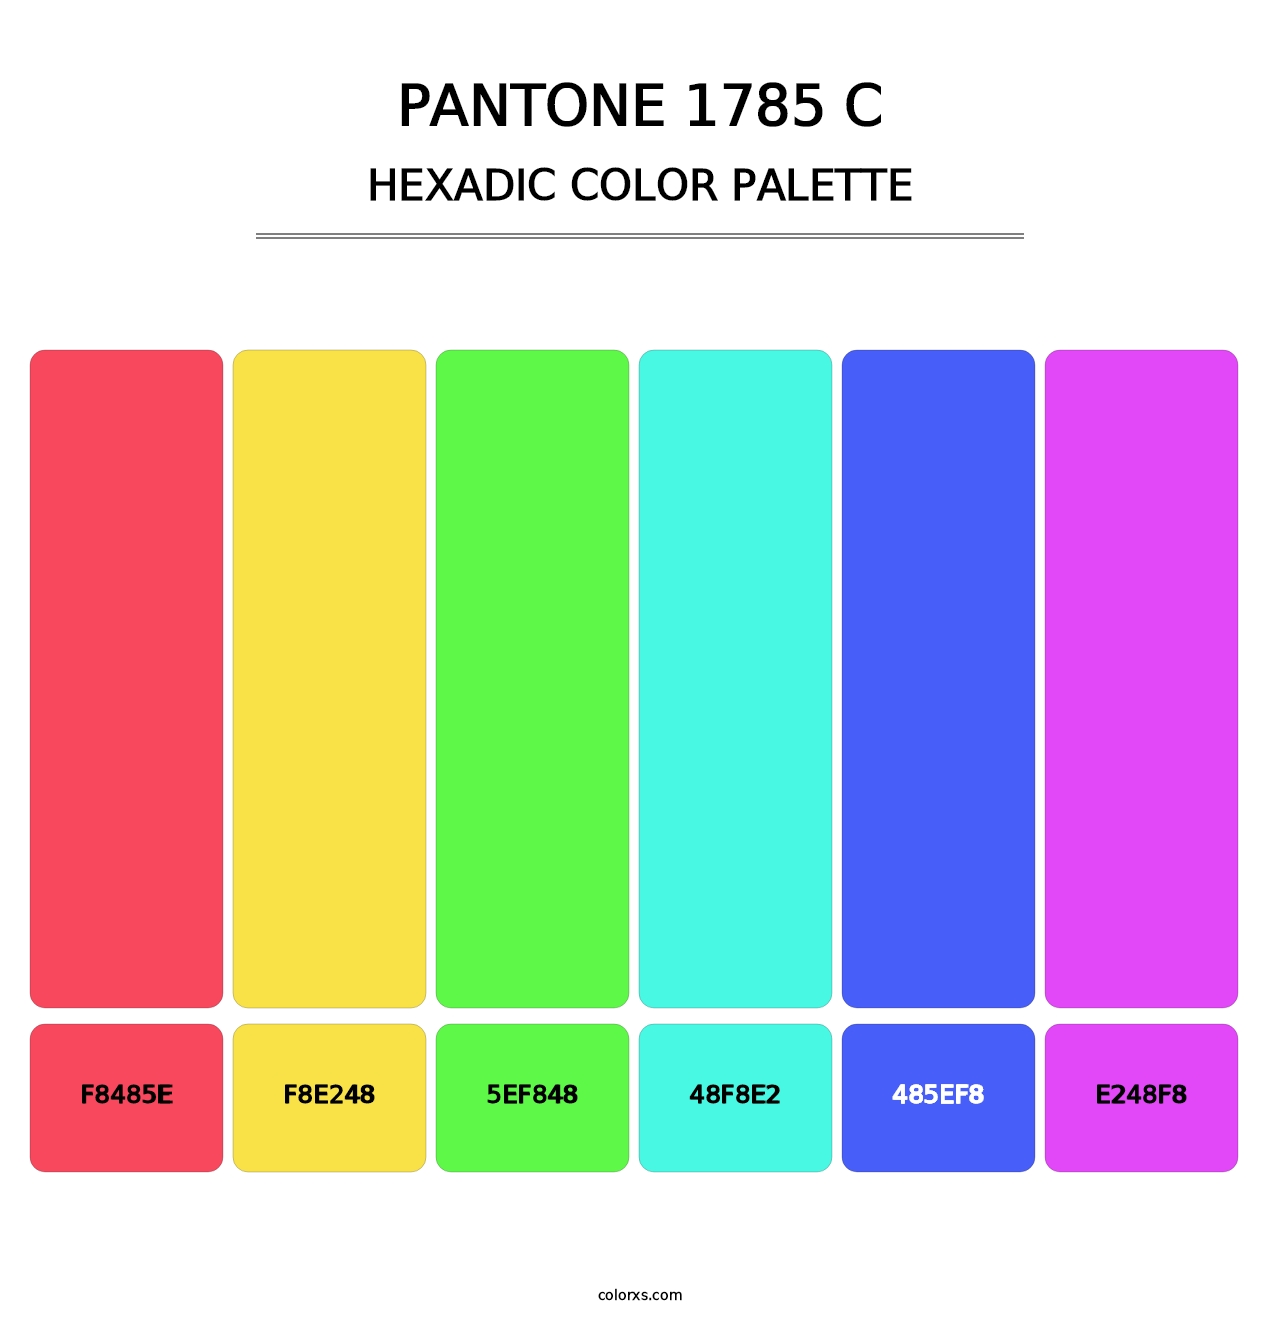 PANTONE 1785 C - Hexadic Color Palette